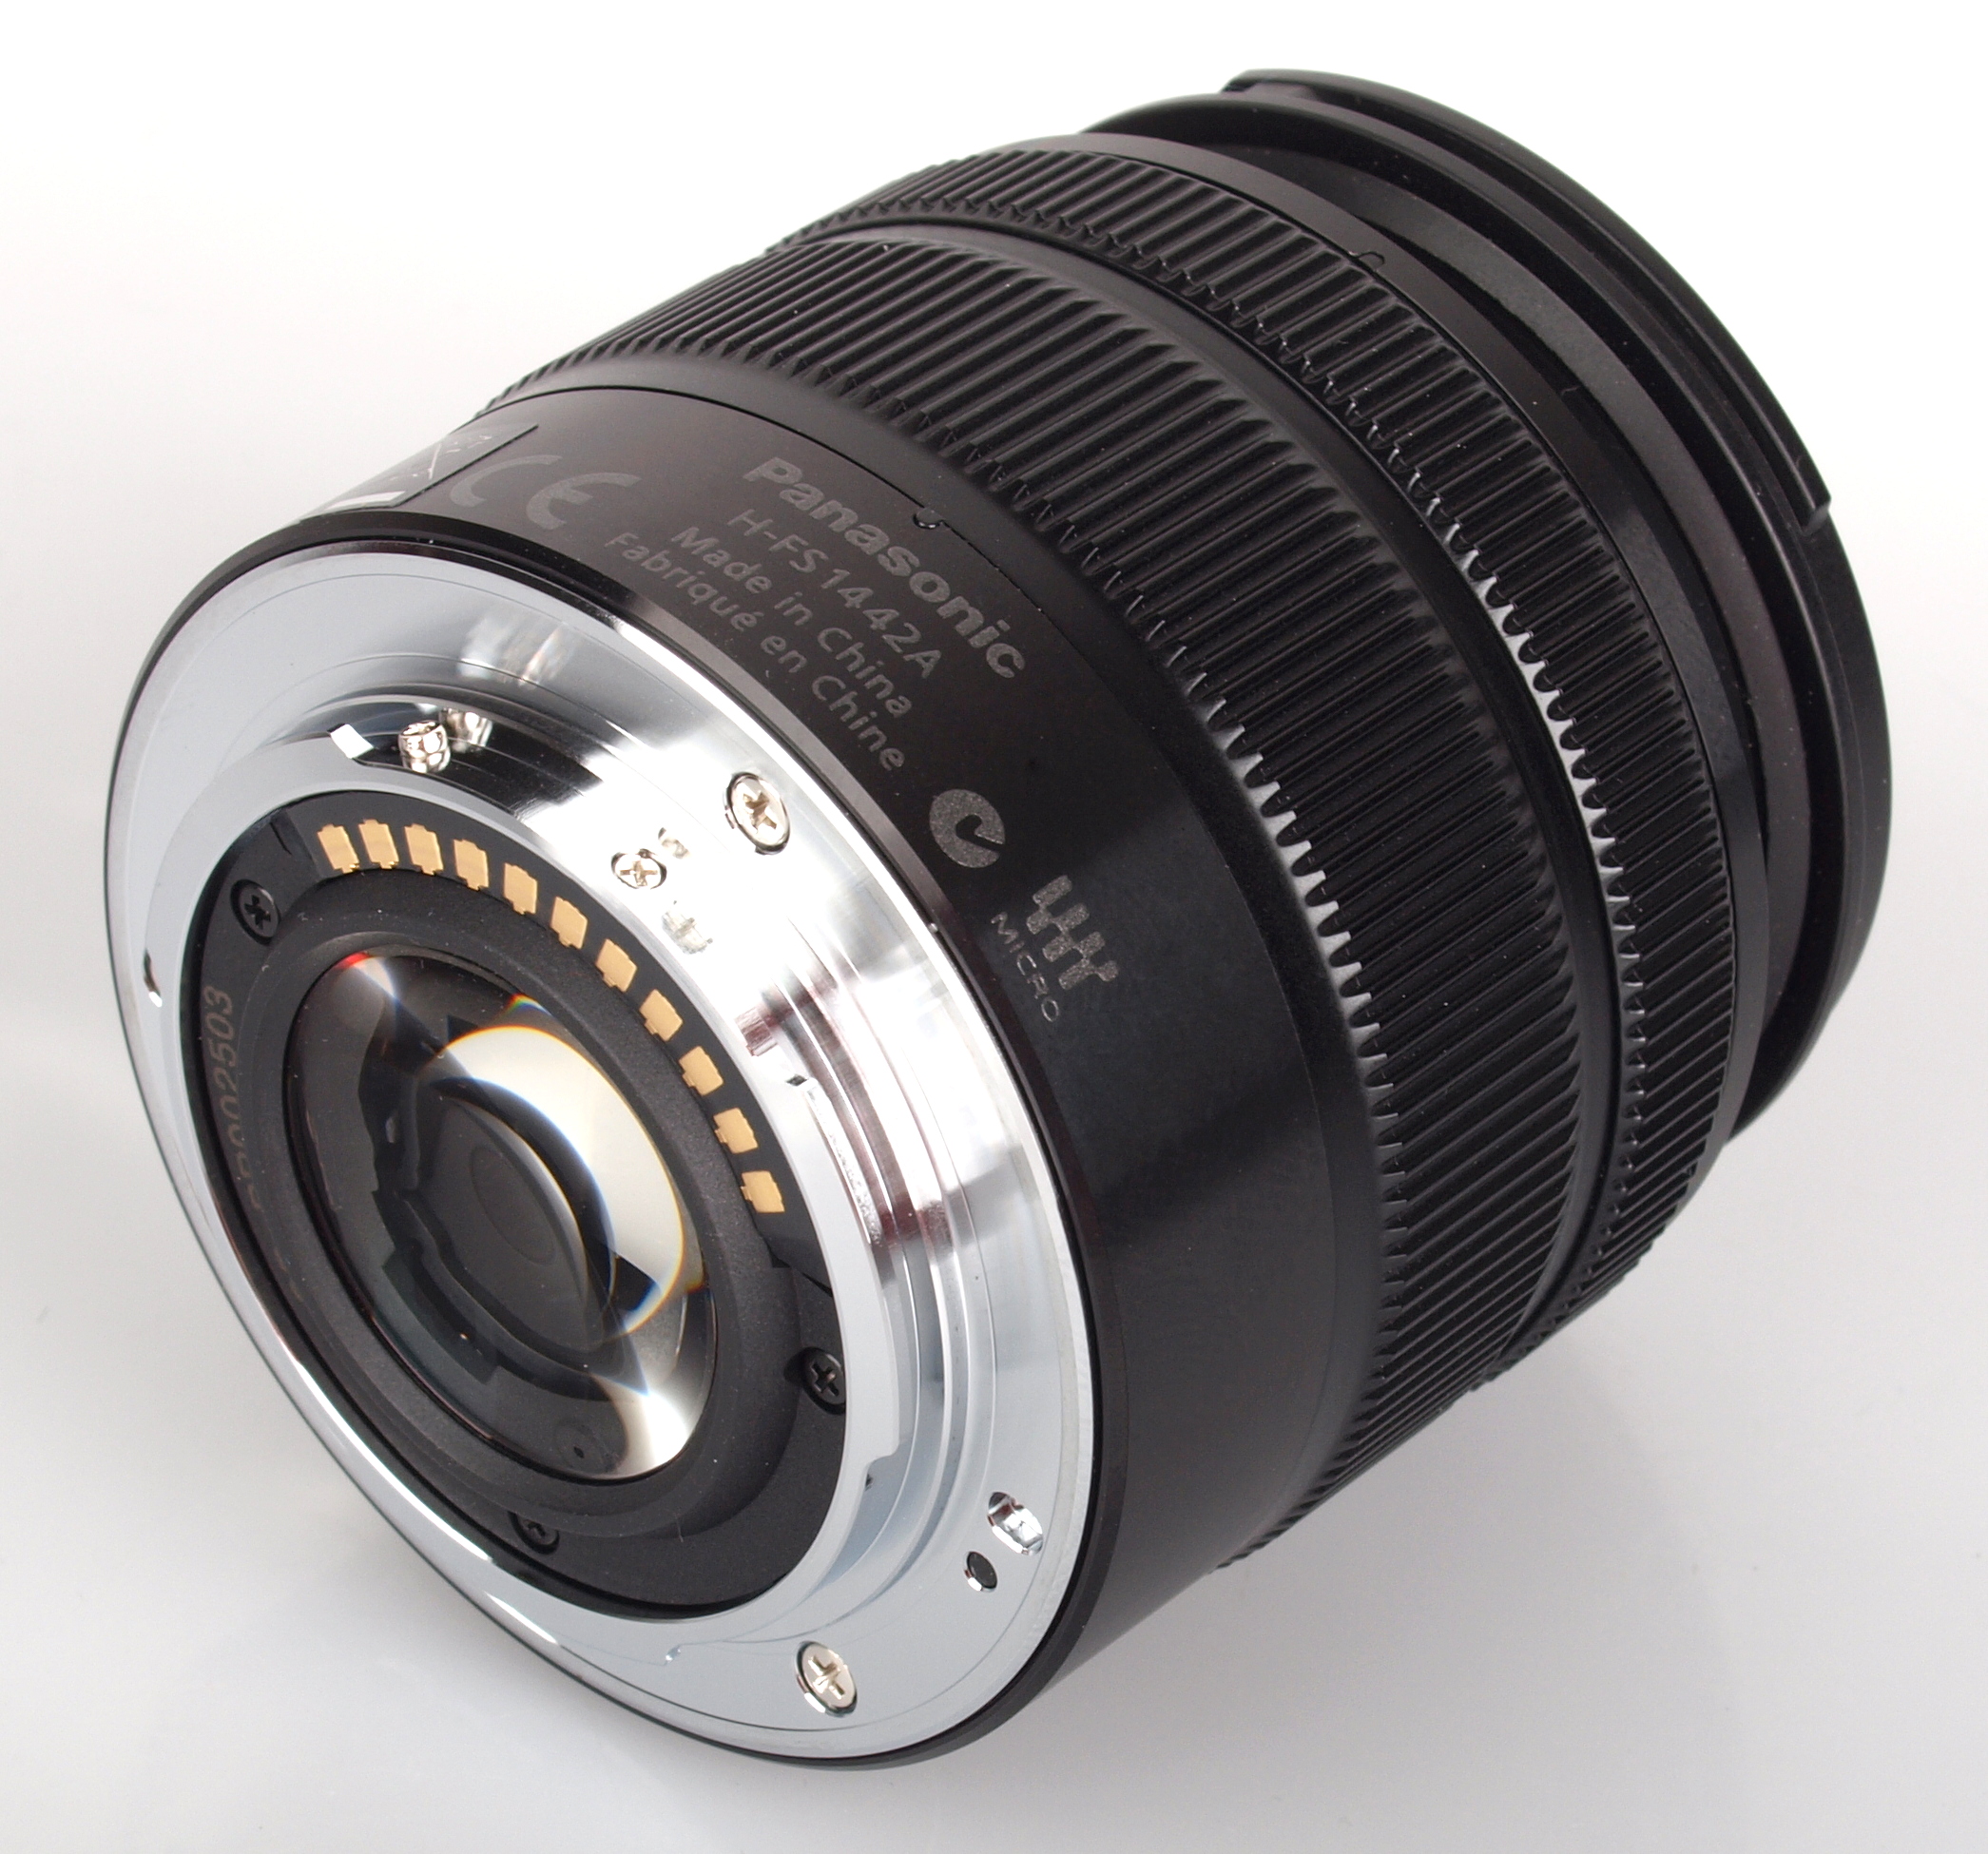 Panasonic Lumix G VARIO 14-42mm f/3.5-5.6 II Lens Review